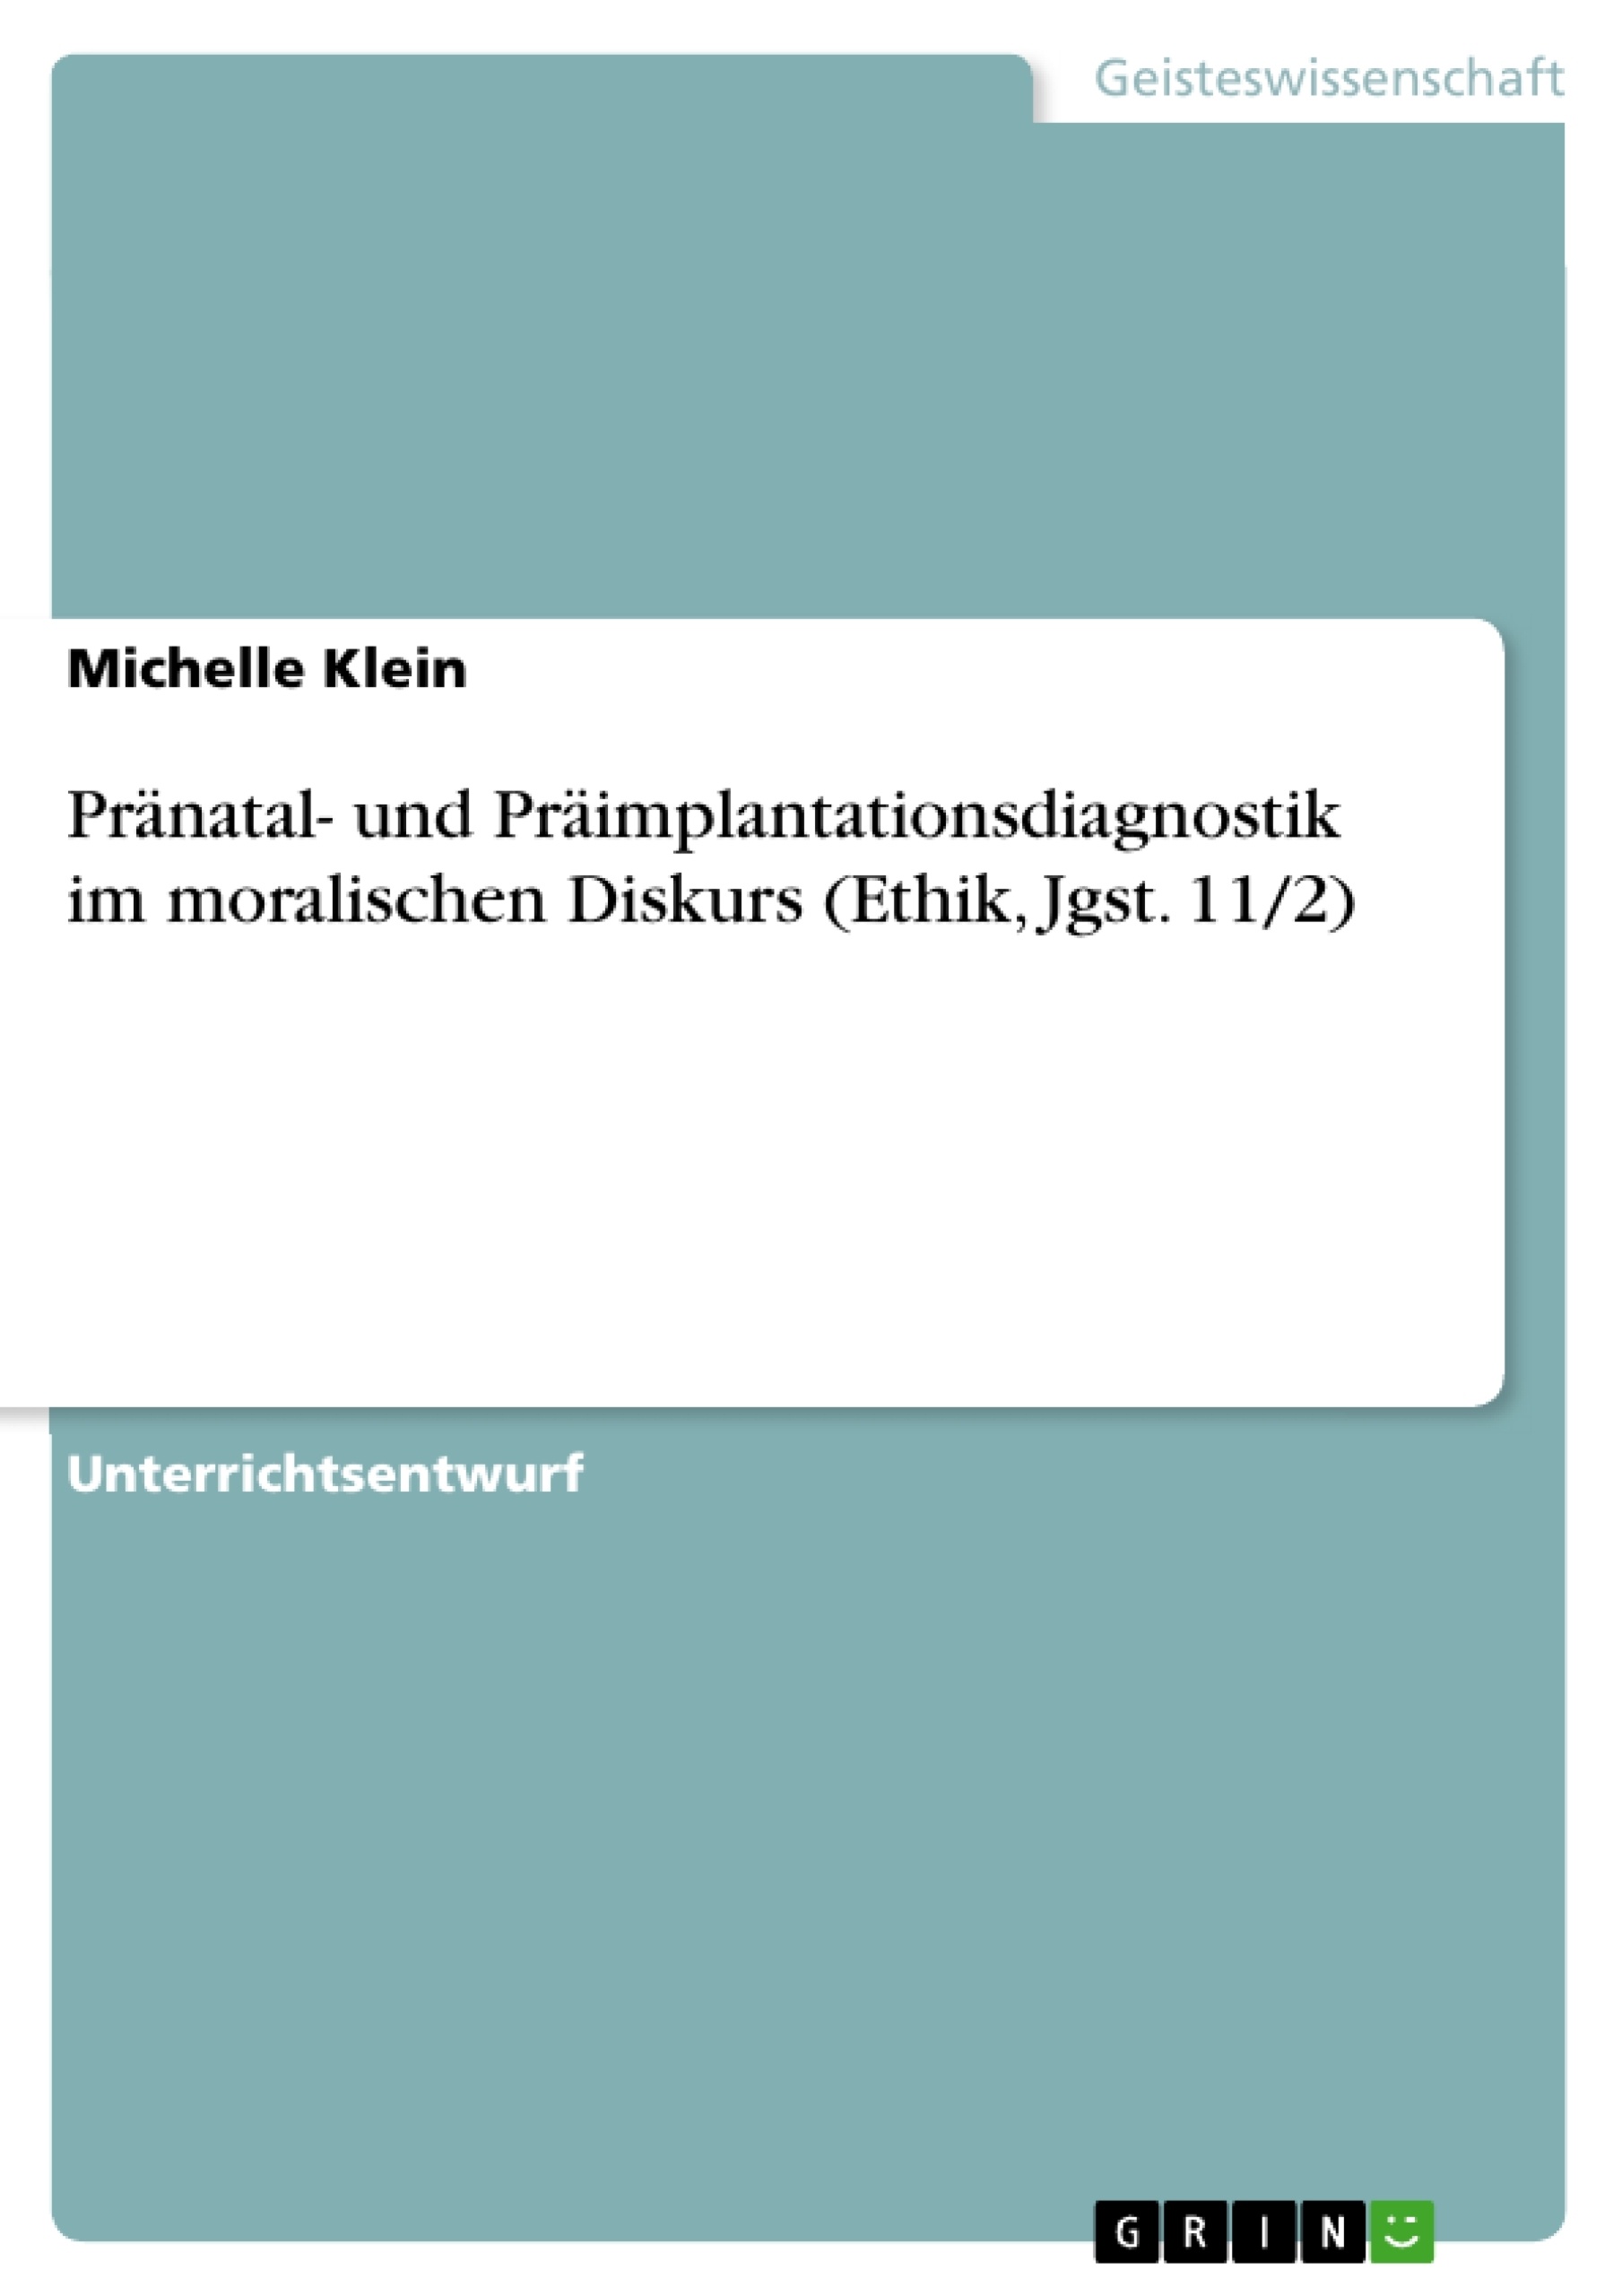 Titre: Pränatal- und Präimplantationsdiagnostik im moralischen Diskurs (Ethik, Jgst. 11/2)